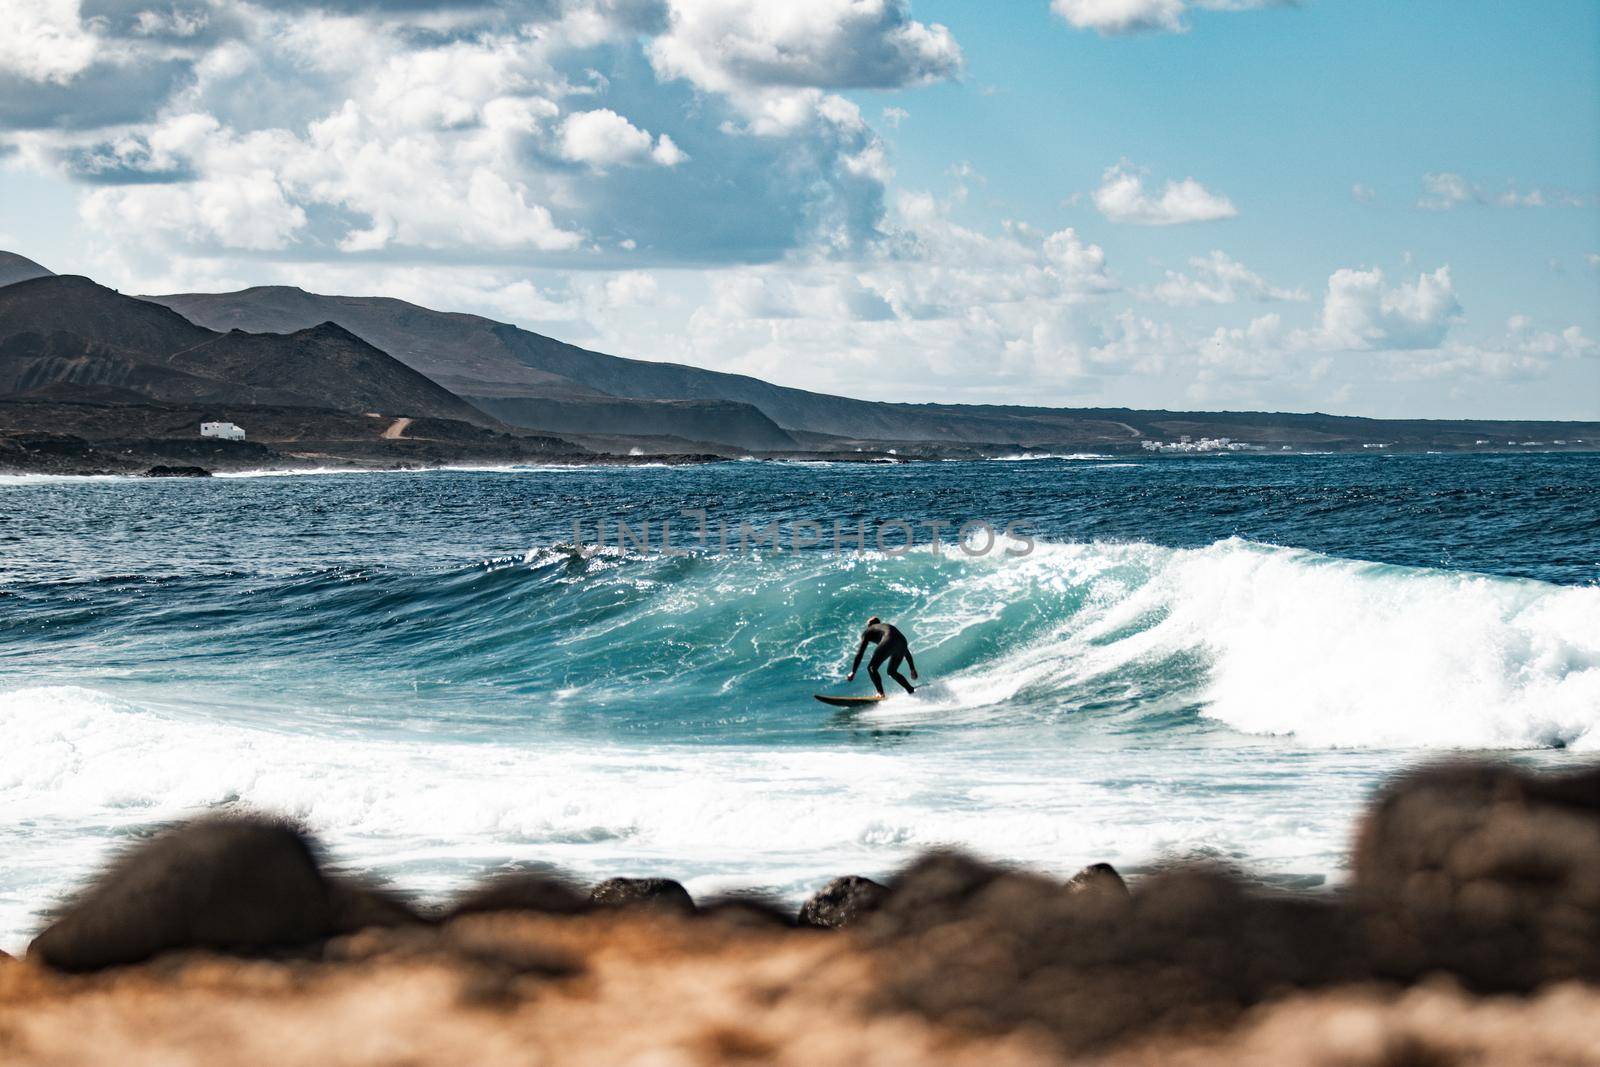 Wild rocky coastline of surf spot La Santa Lanzarote, Canary Islands, Spain. Surfer riding a big wave in rocky bay, volcano mountain in background